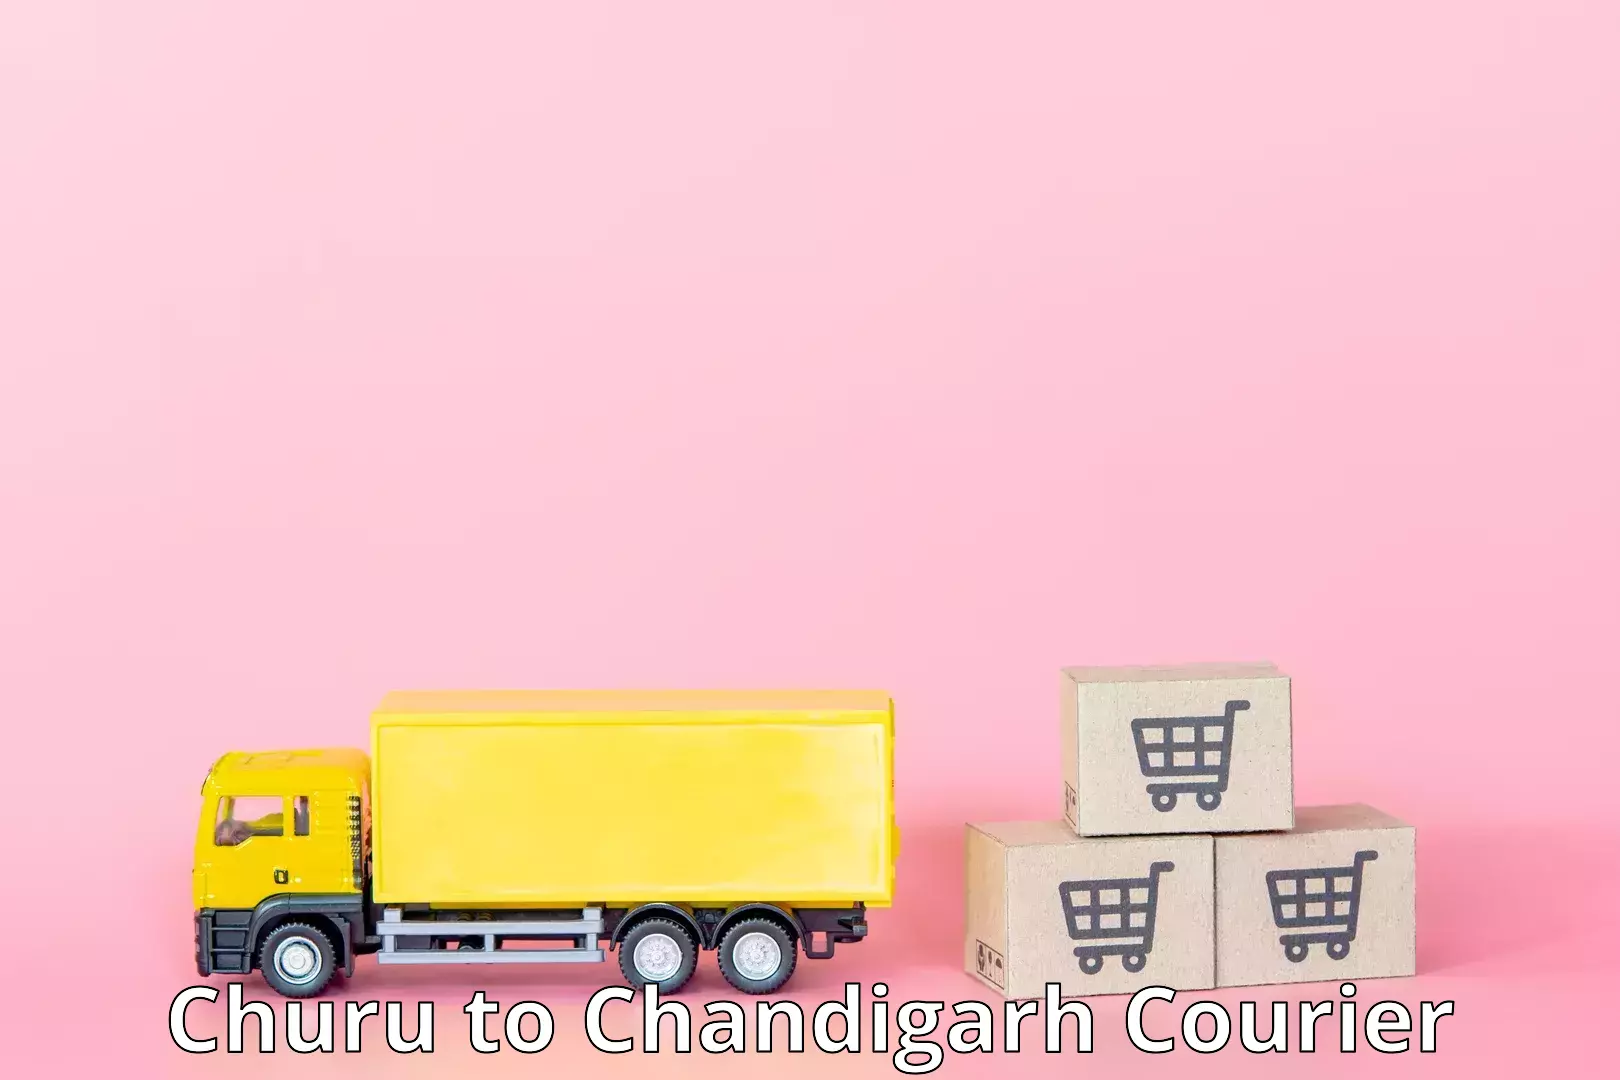 Local delivery service Churu to Chandigarh